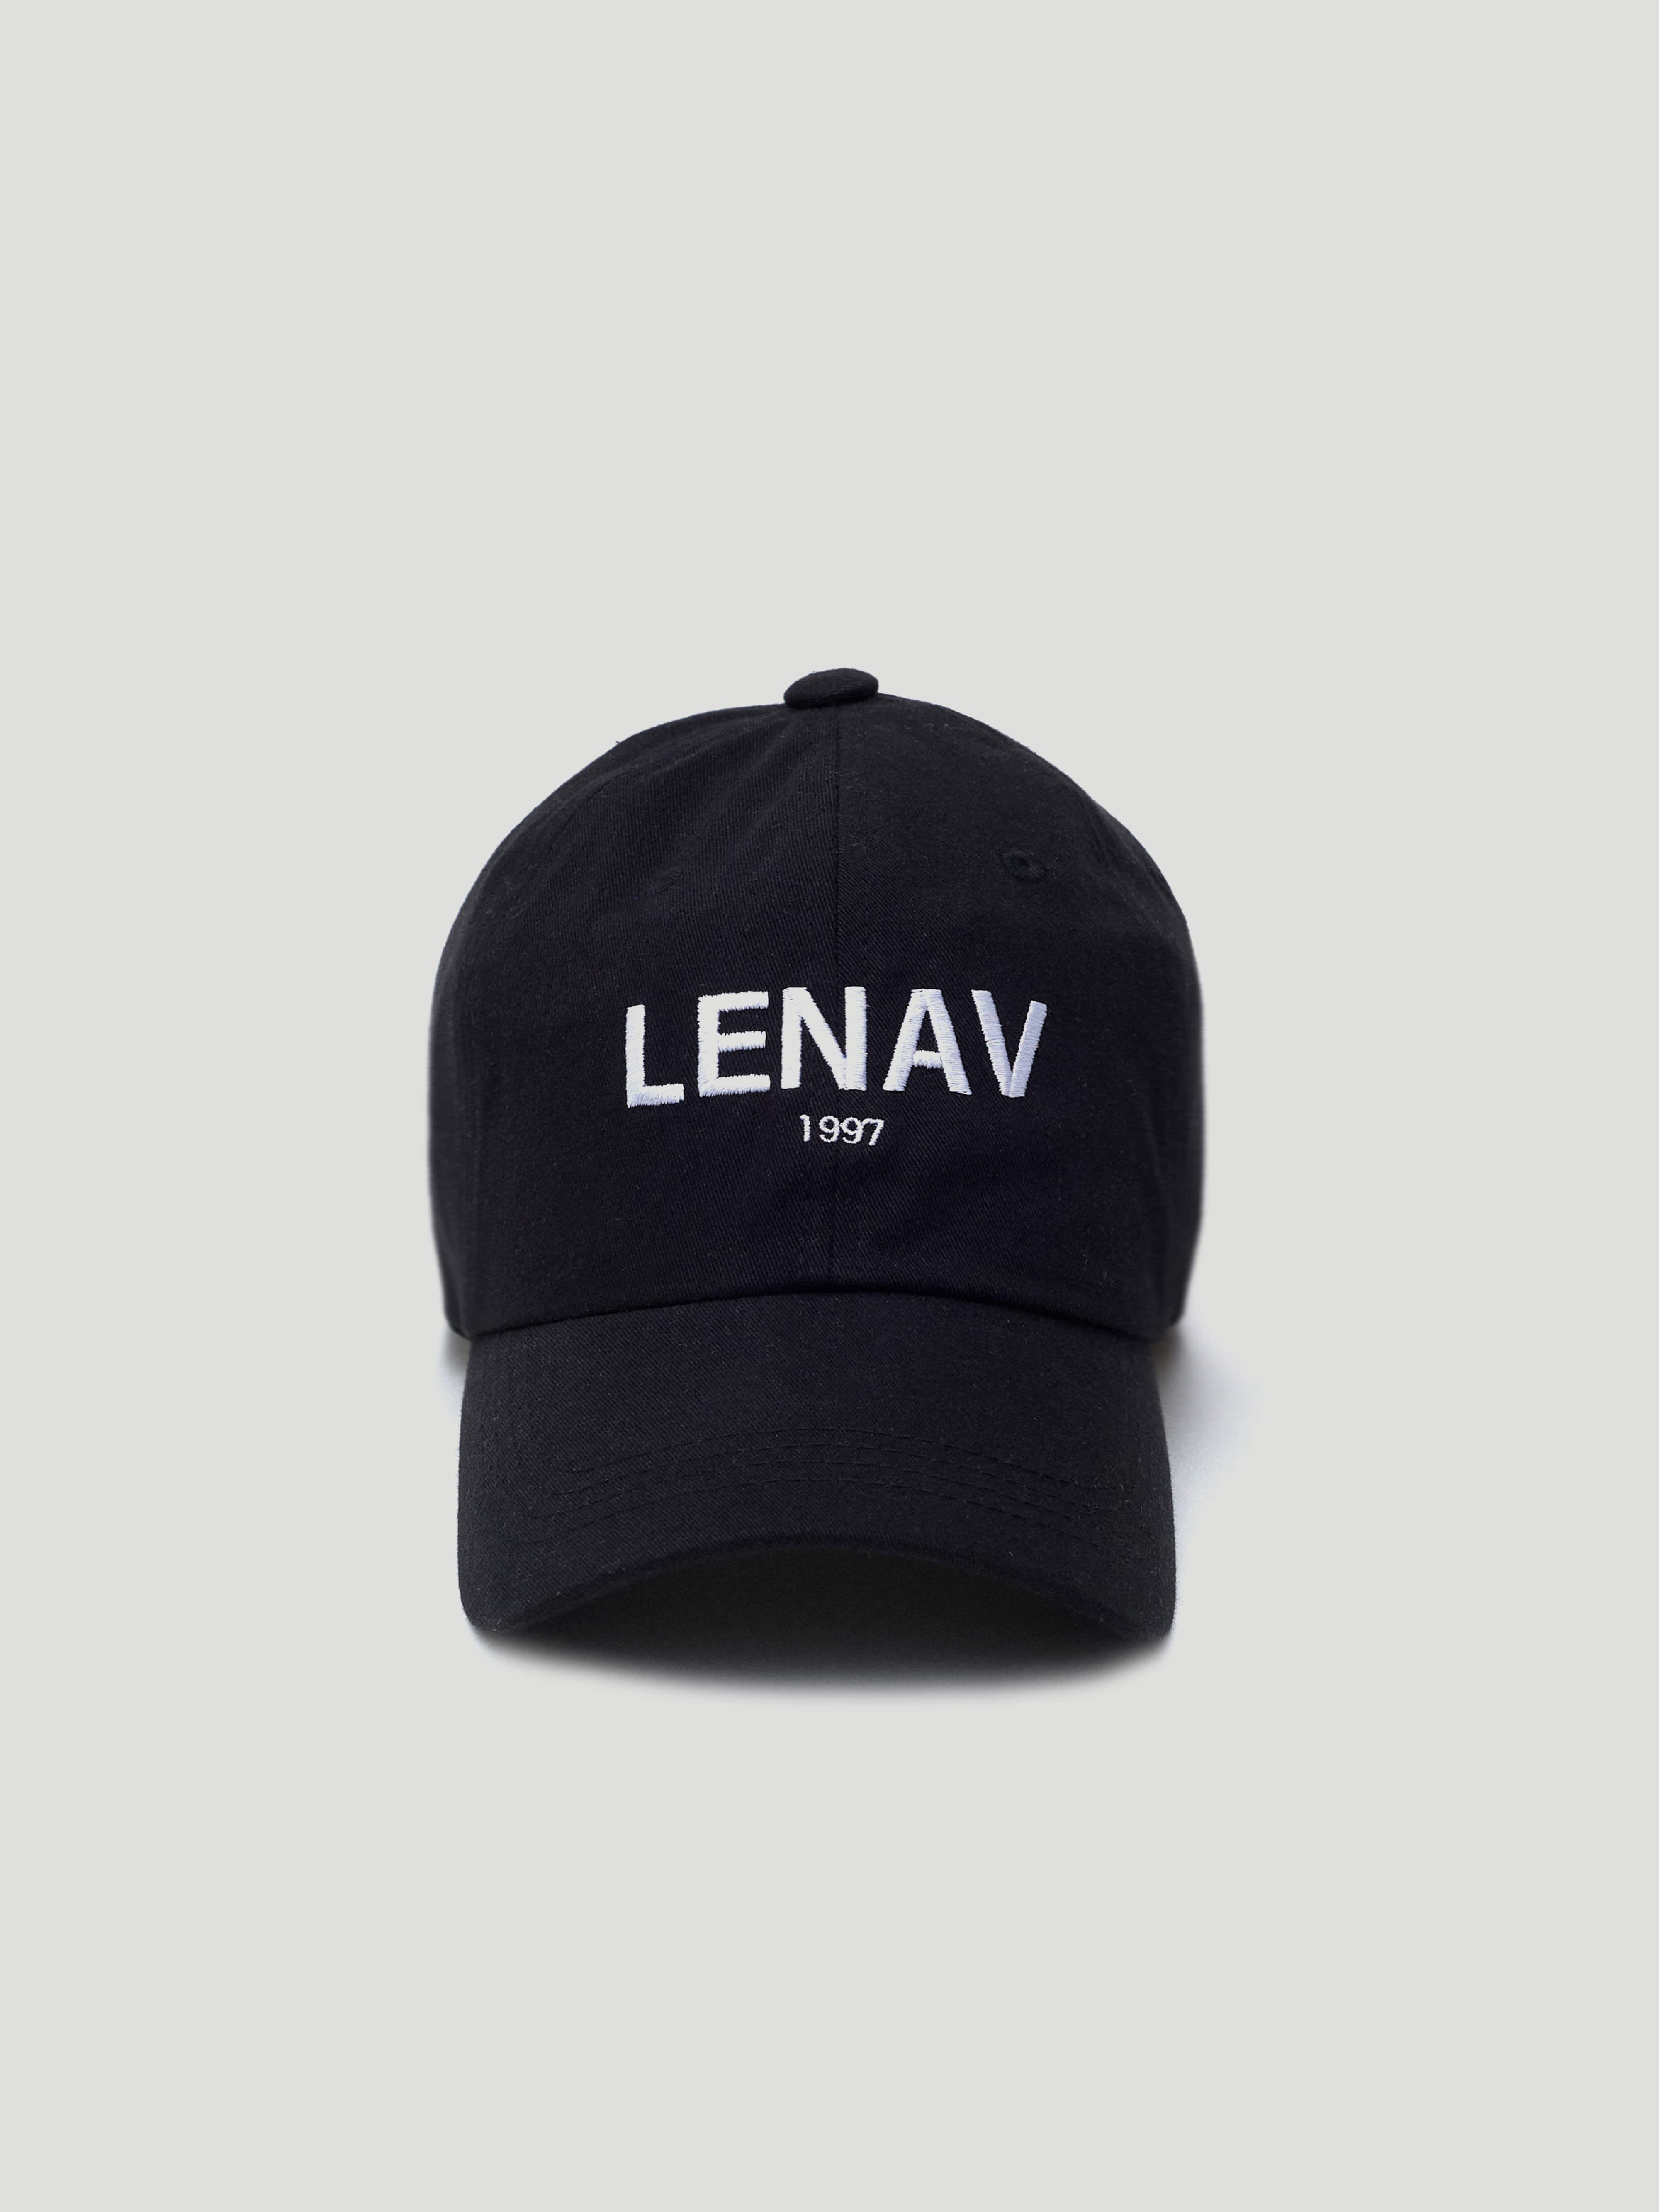 LENAV Black Ball Cap (블랙)